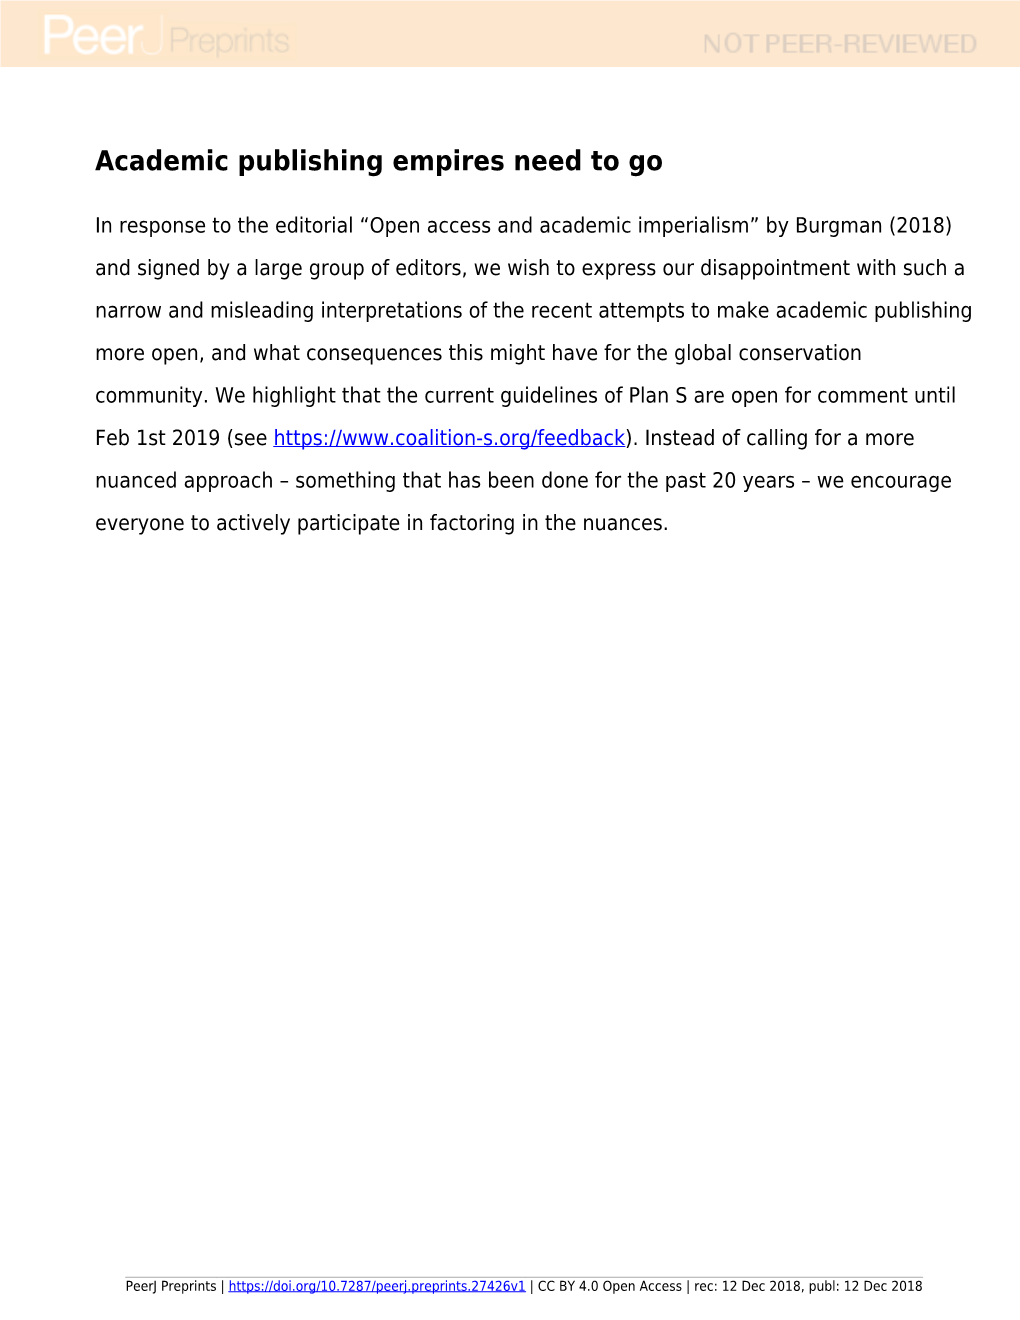 Academic Publishing Empires Need to Go